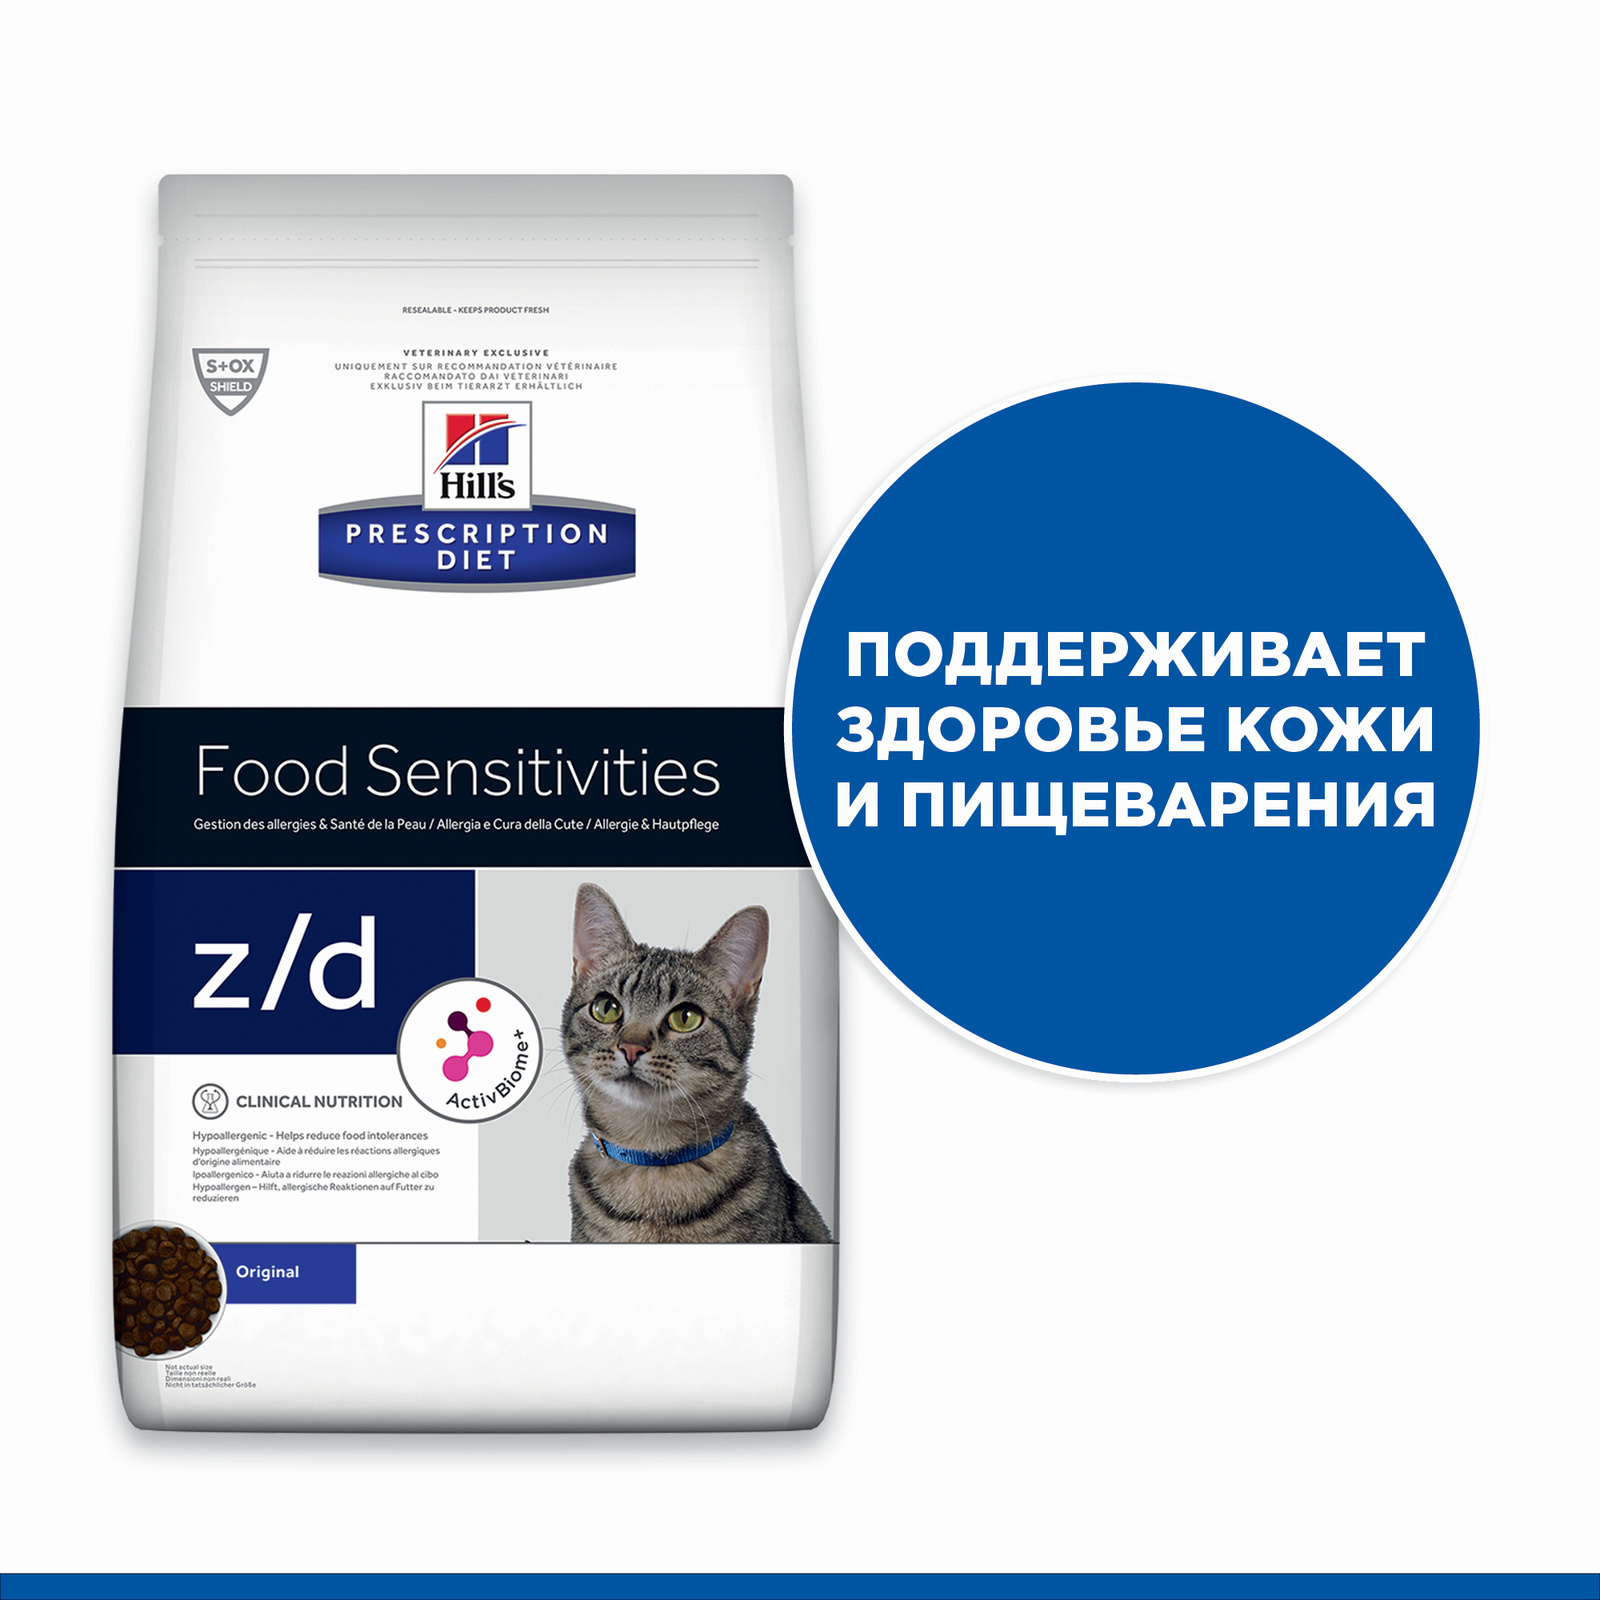 z/d Food Sensitivities сухой диетический, для кошек при пищевой аллергии, гипоаллергенный (2 кг) Hill's Prescription Diet z/d Food Sensitivities сухой диетический, для кошек при пищевой аллергии, гипоаллергенный (2 кг) - фото 8